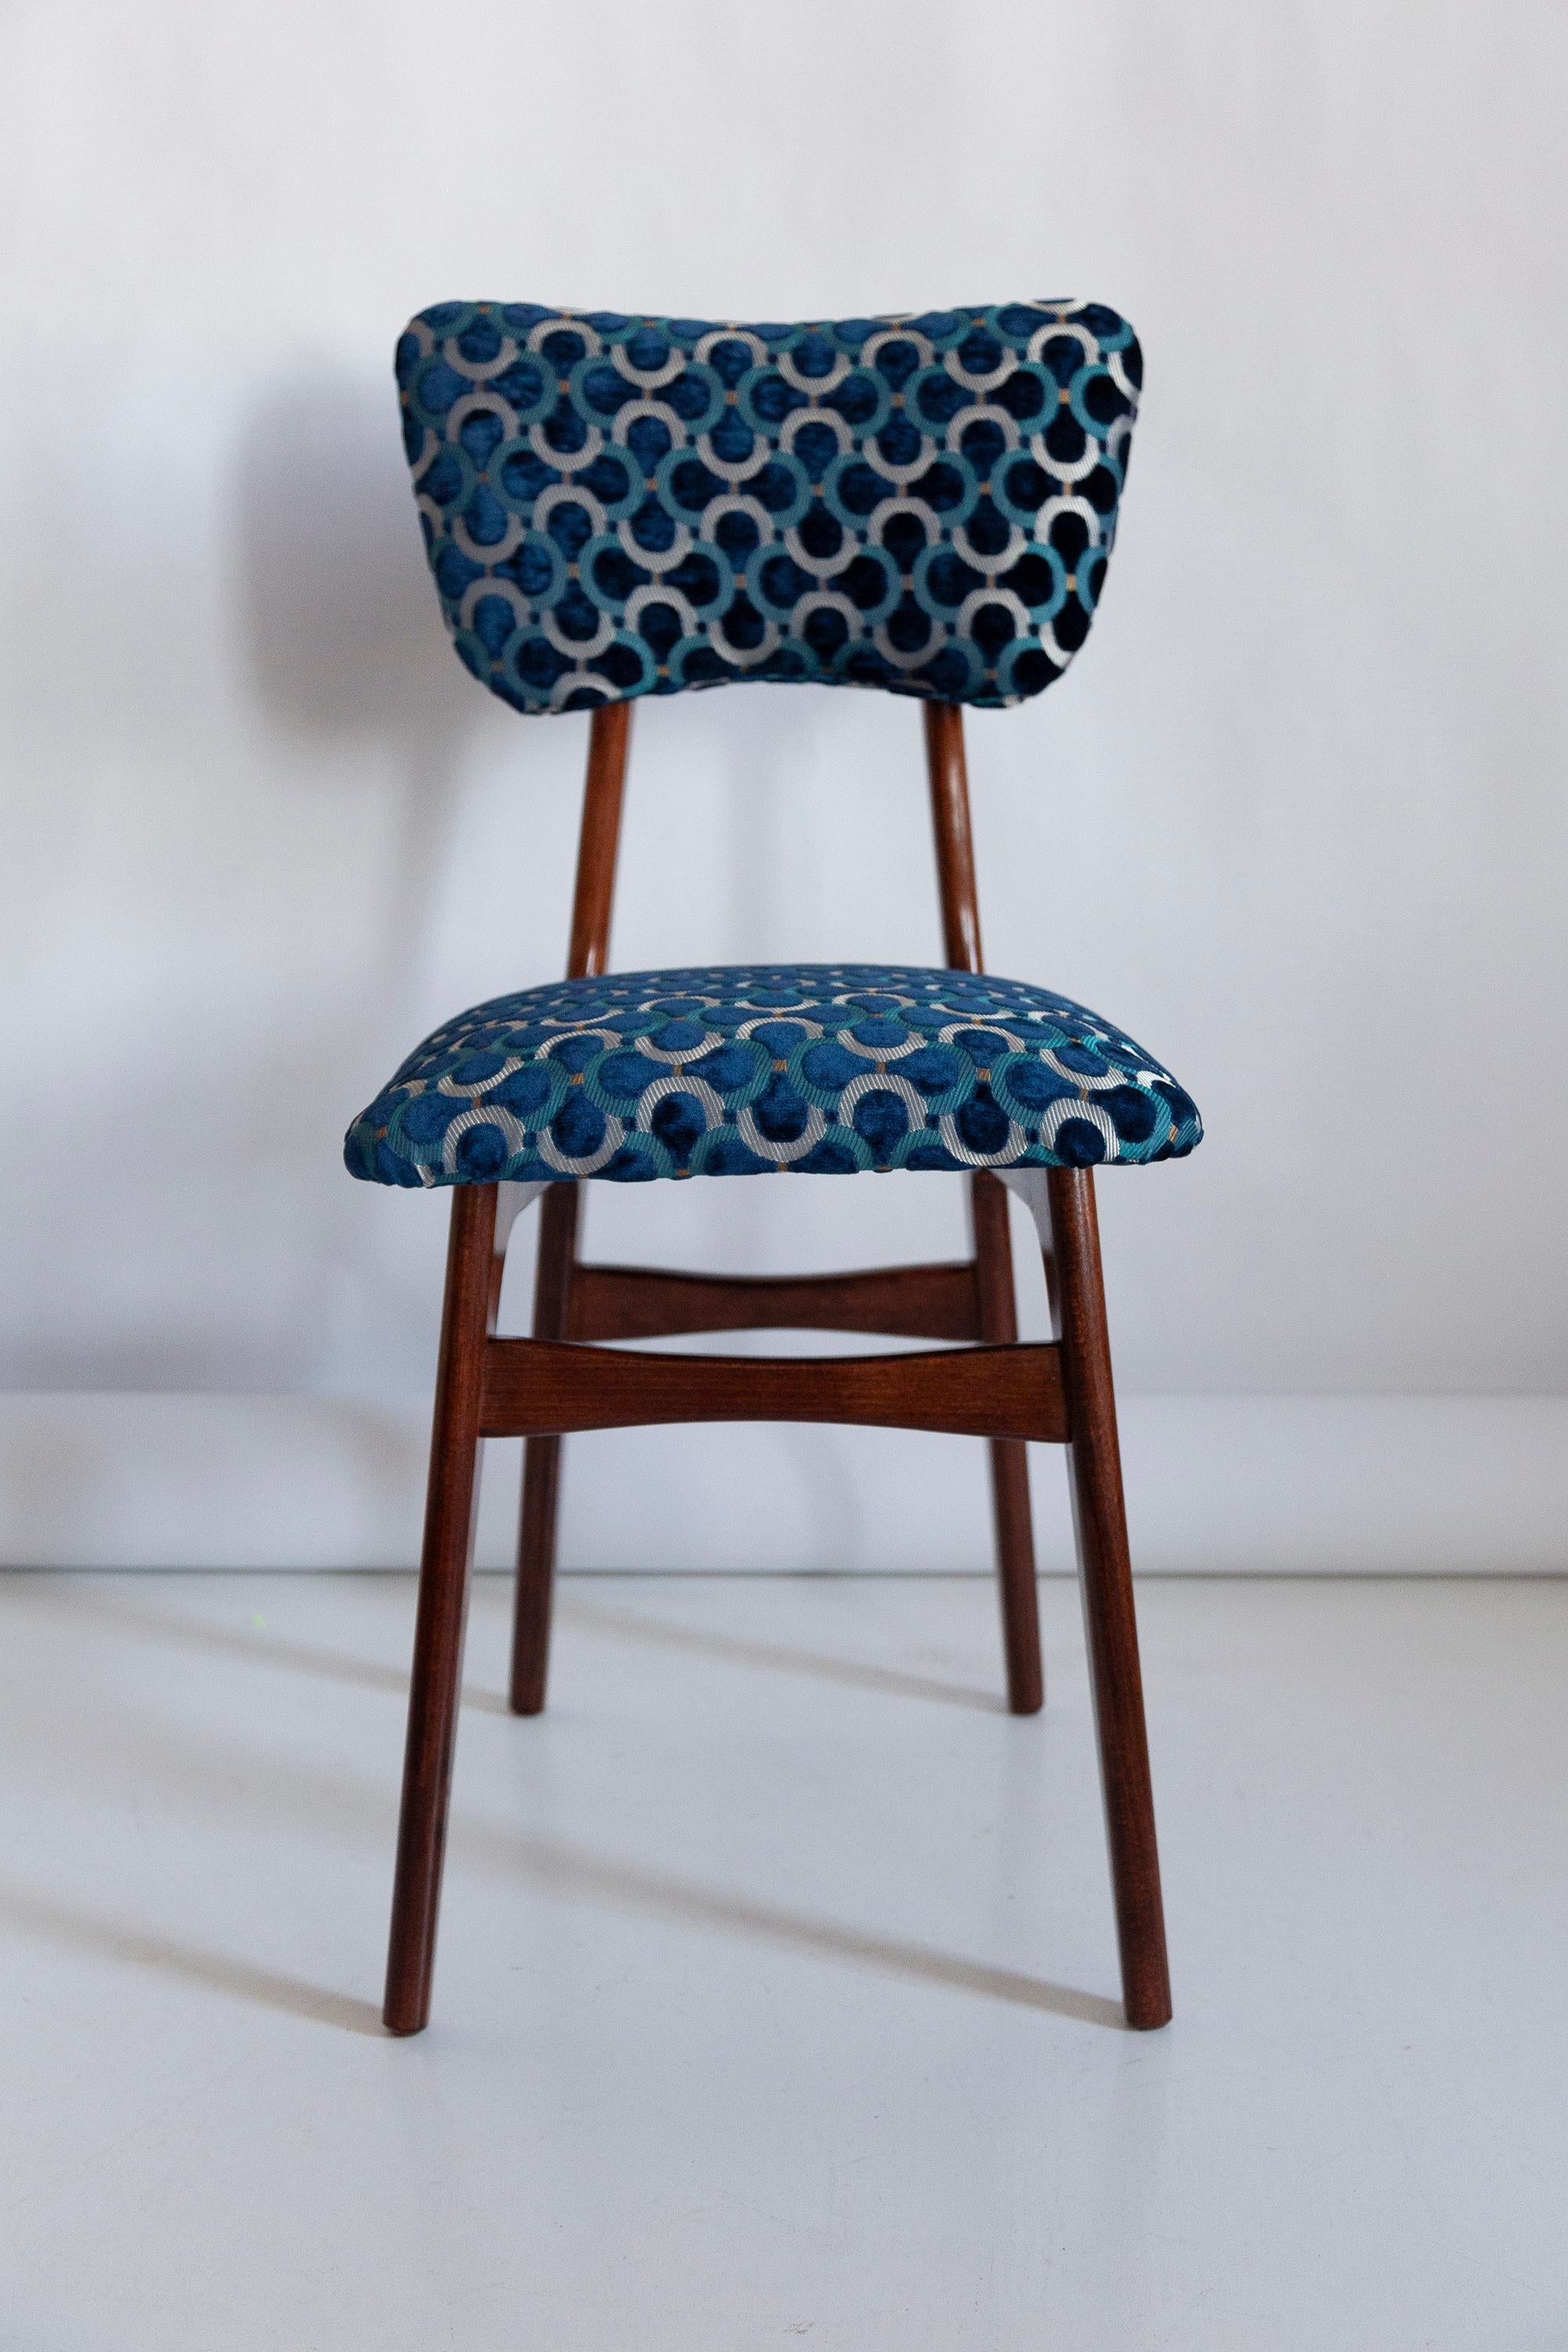 Ten Mid Century Butterfly Chairs, Blue Scarabeo Velvet, Dark Wood, Europe, 1960s For Sale 3